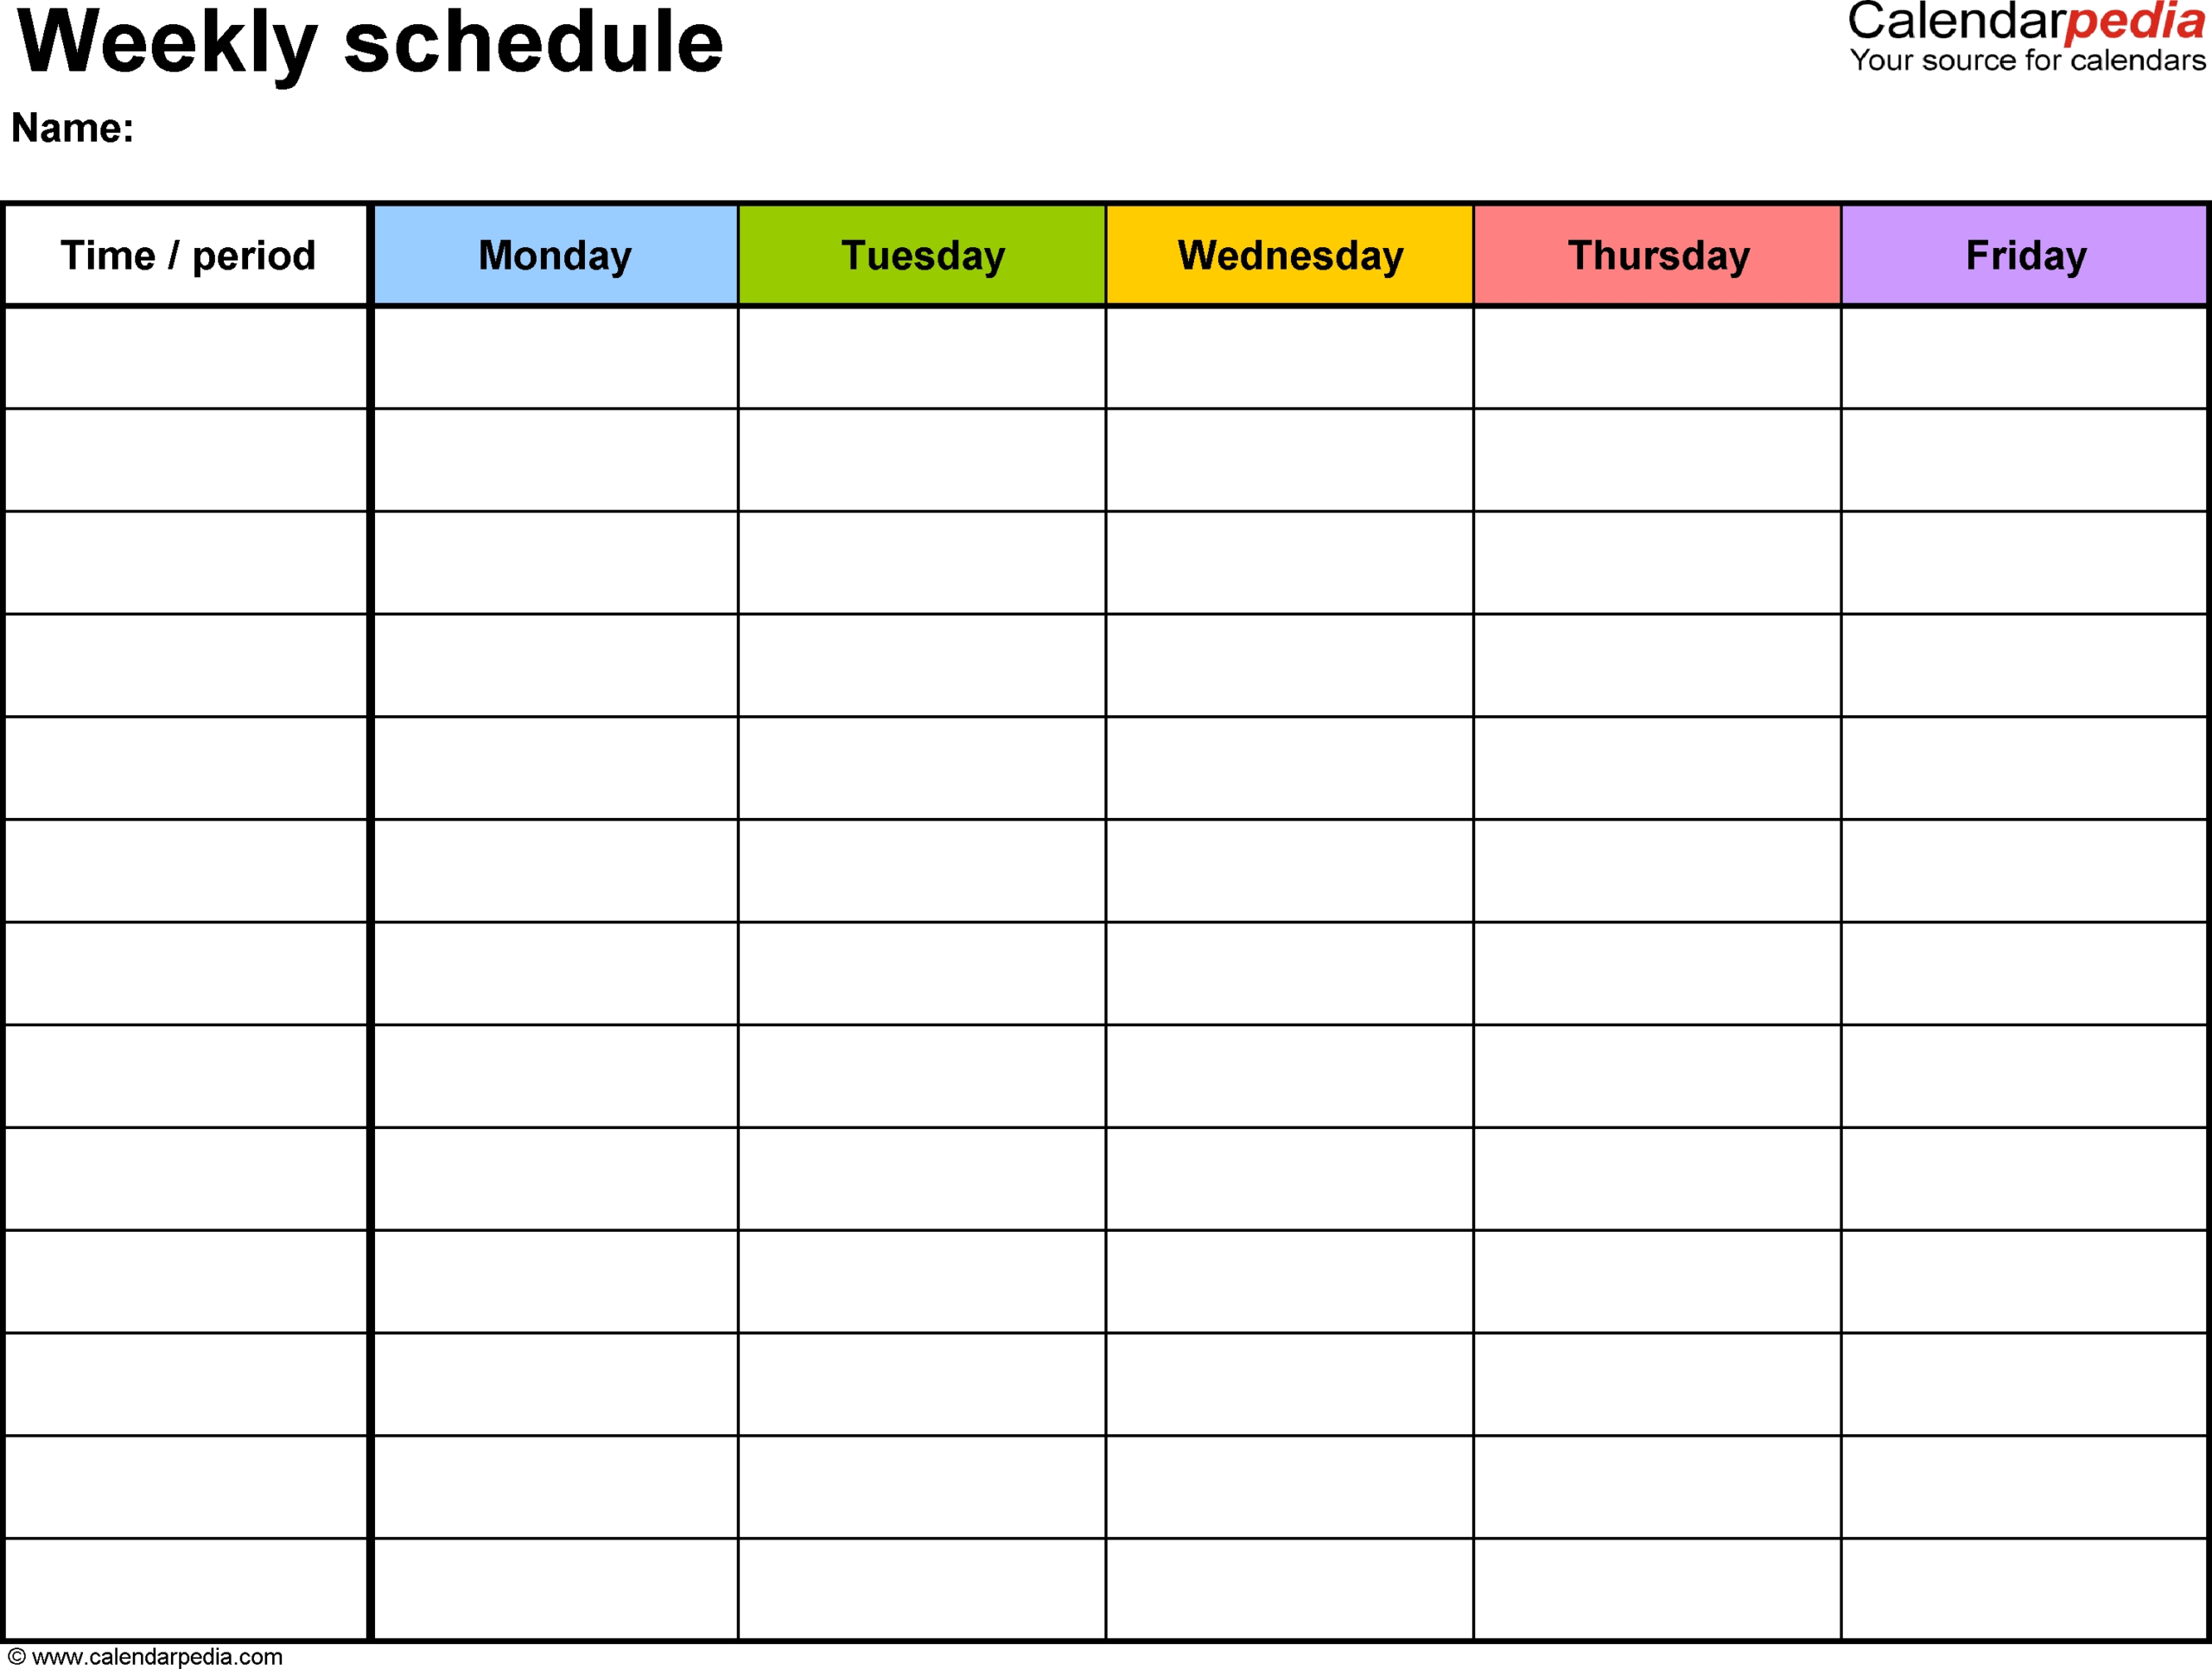 7Day Week Blank Calendar Template  Calendar Inspiration in 7 Day Calendar Template